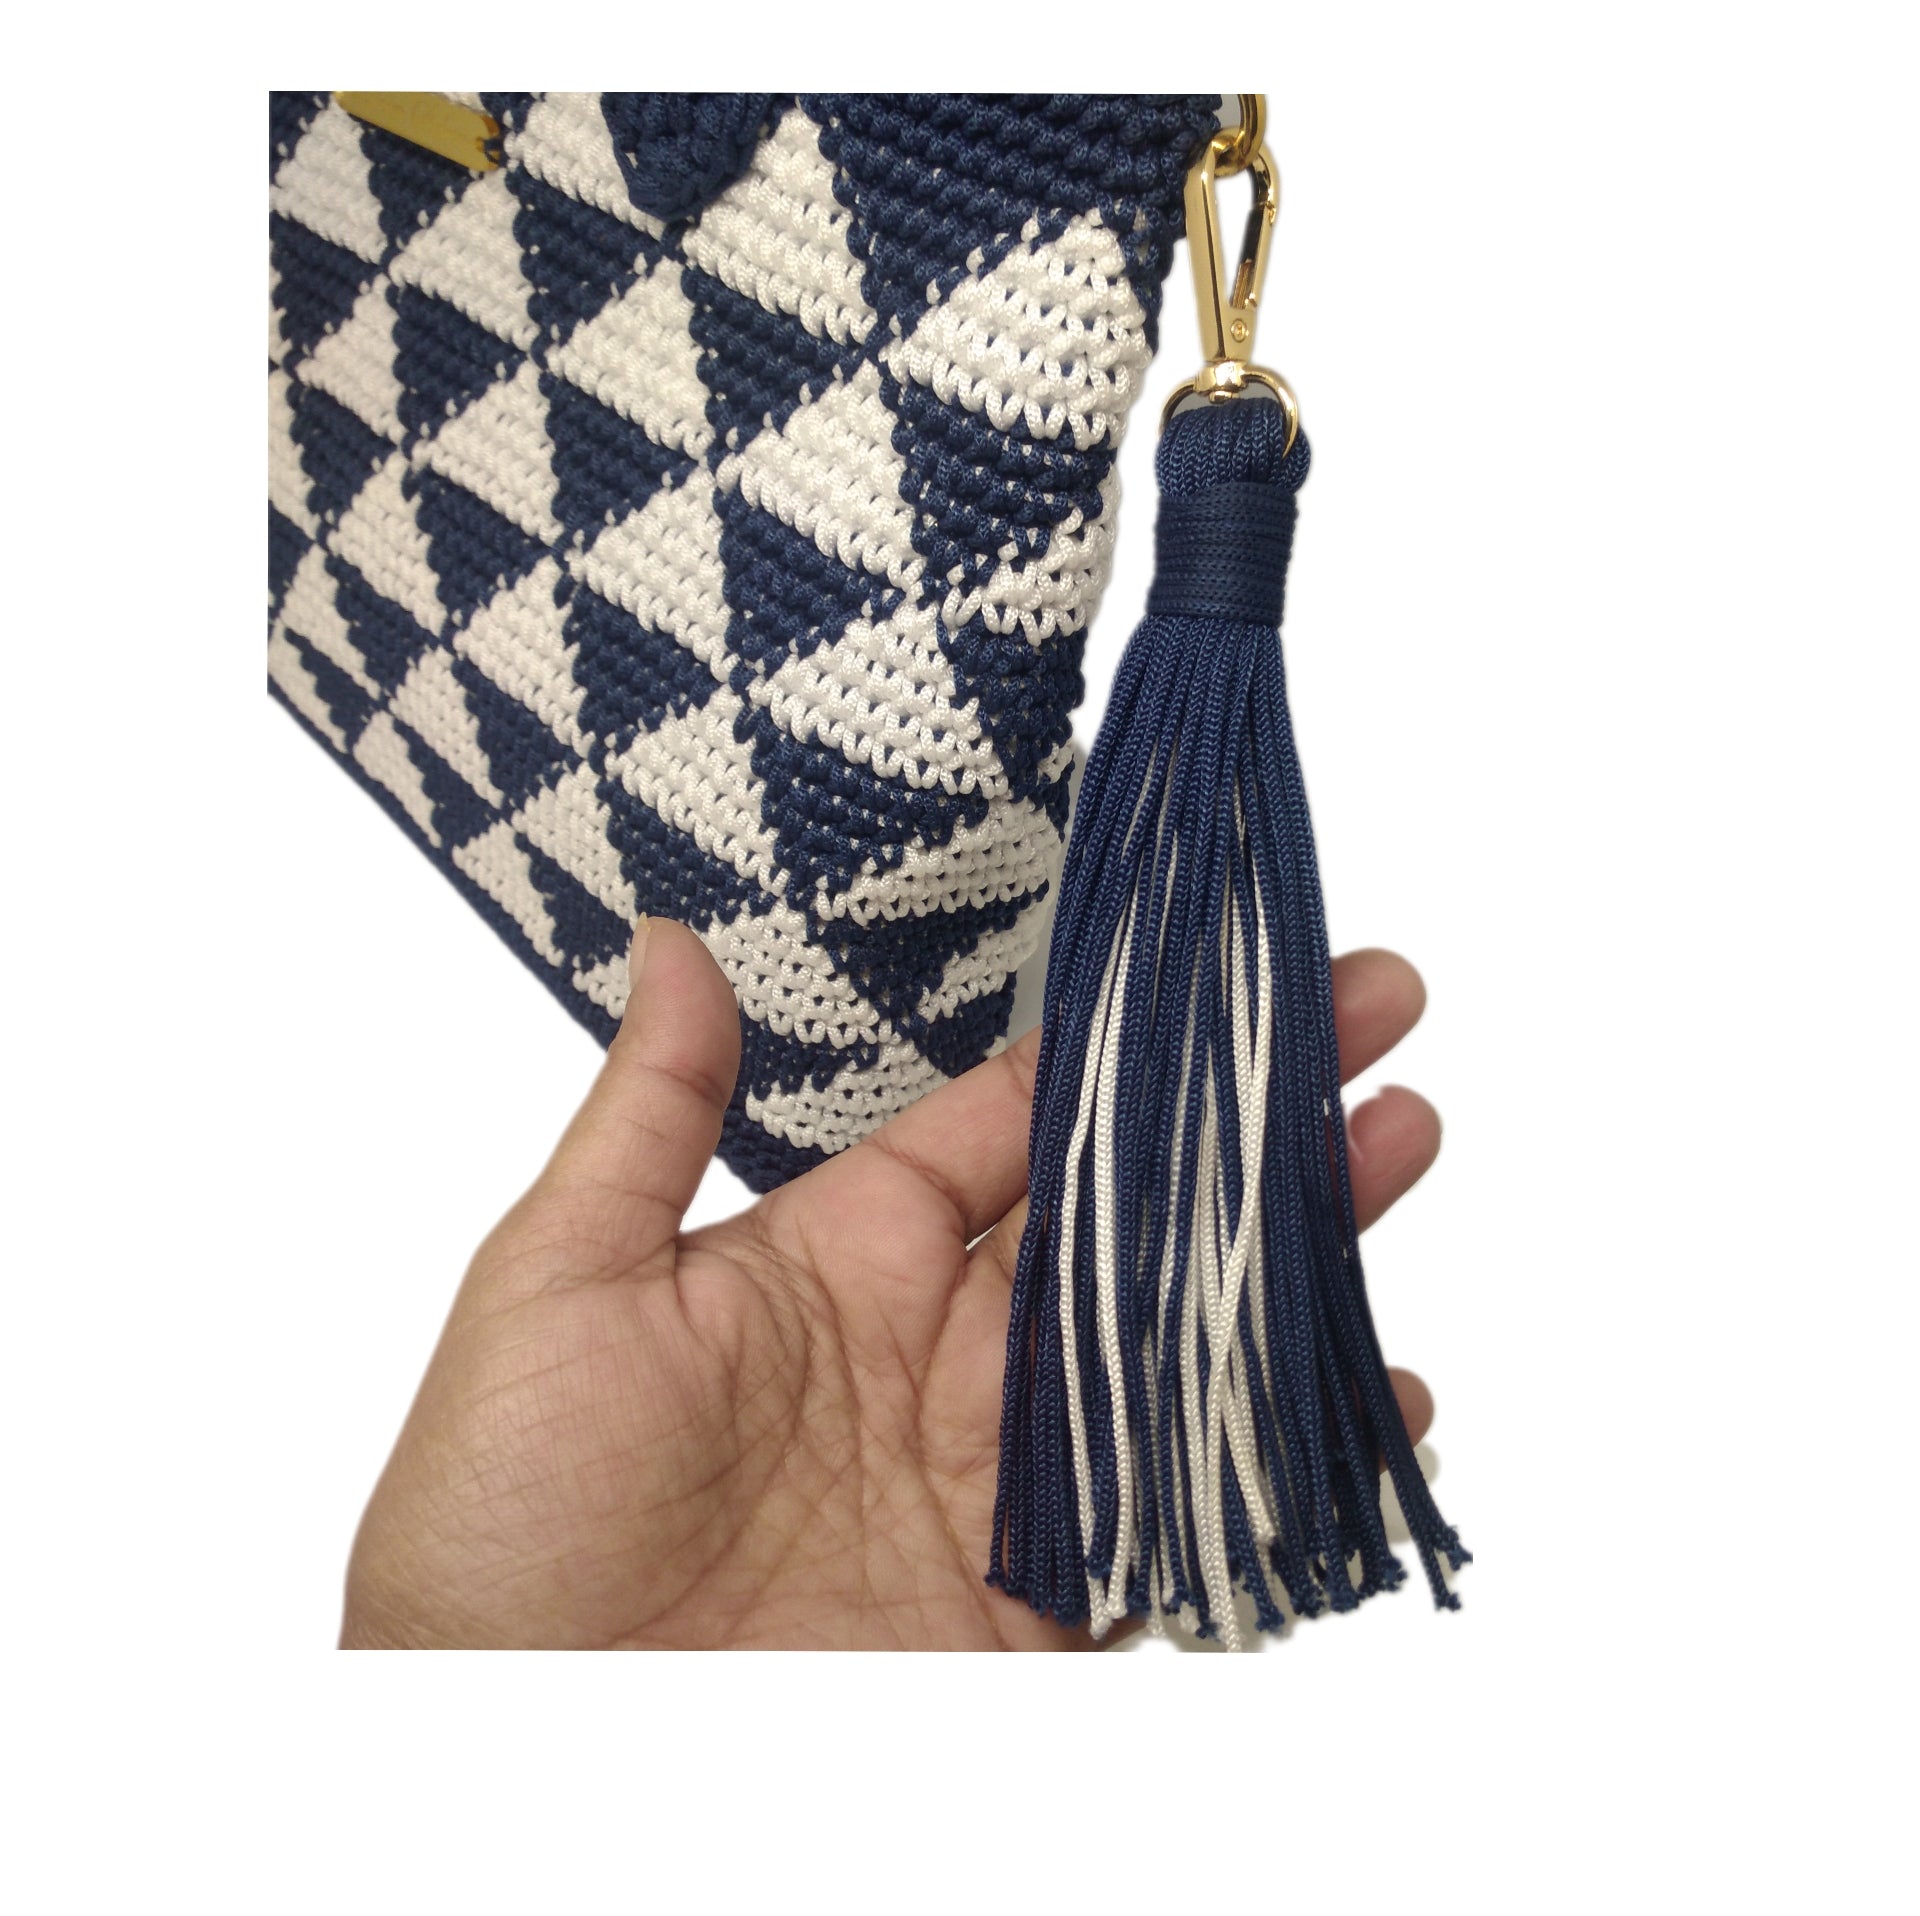  Close up view of tassel on Blue and white crochet geo print handbag 